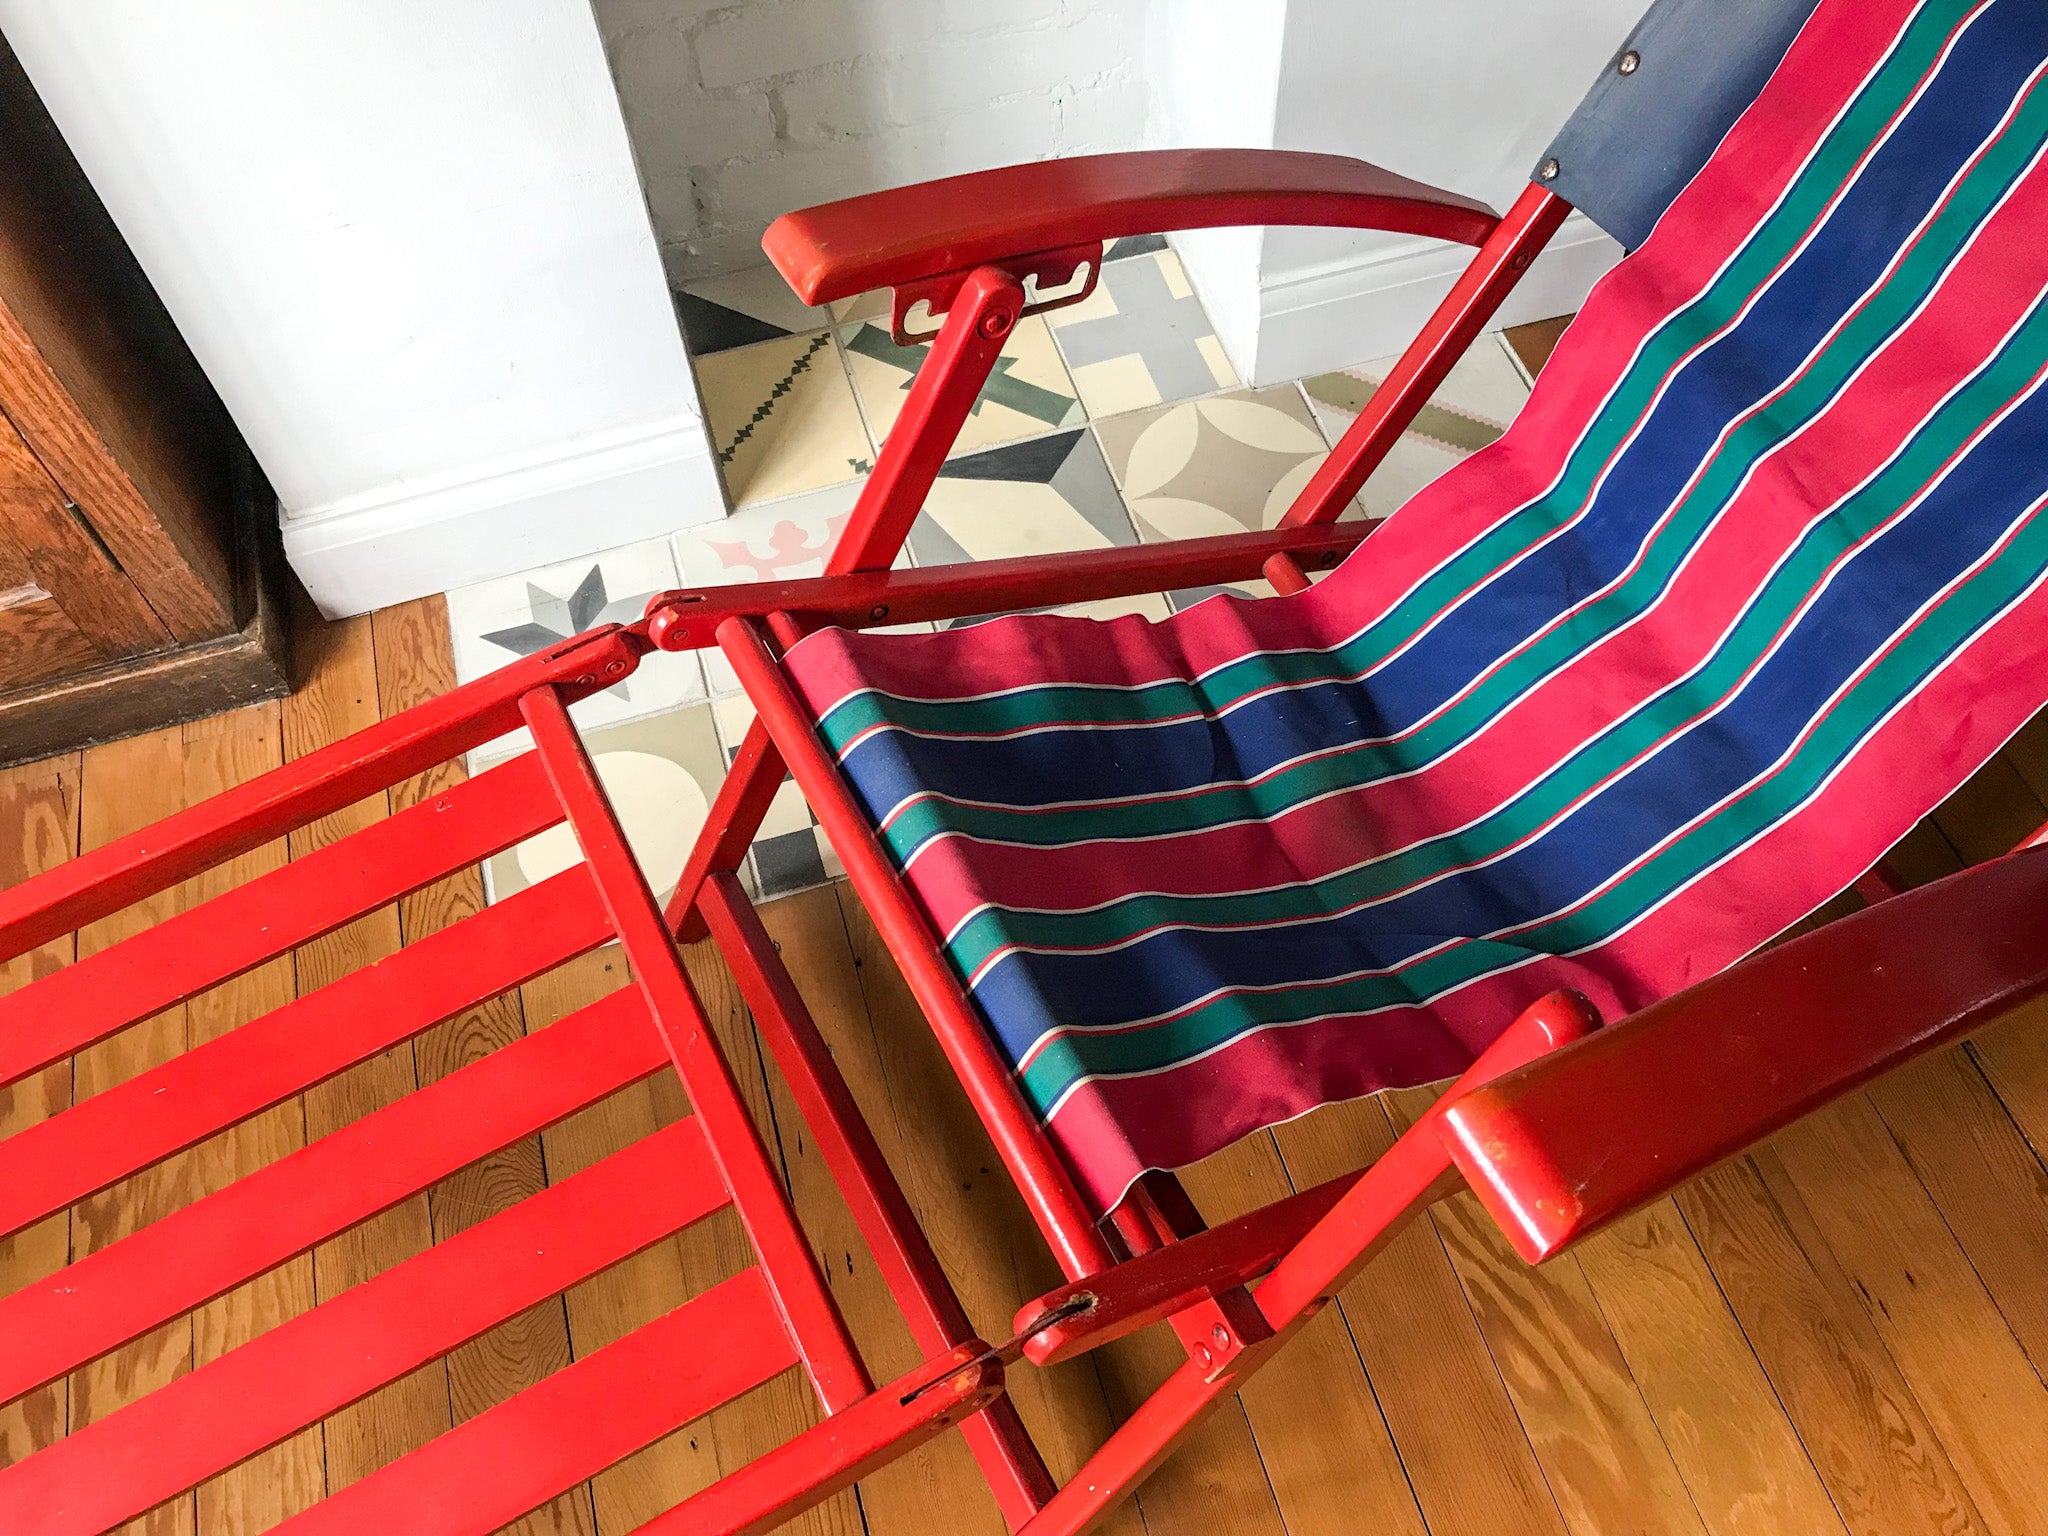 Mid Century German Folding Deck Chair / Chaise Longue